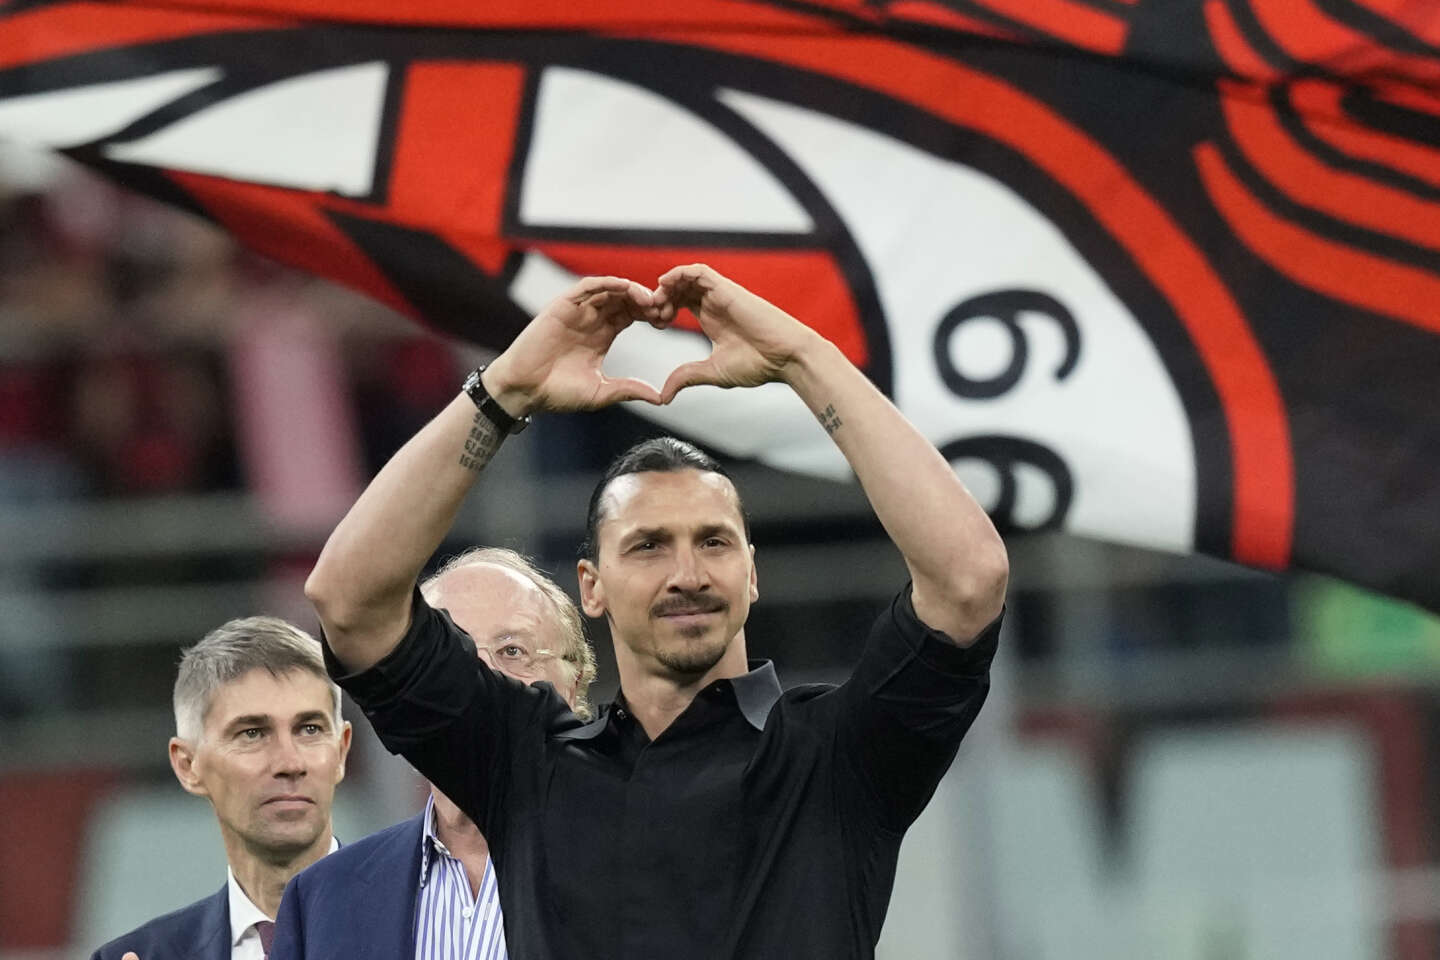 At 41, Zlatan Ibrahimovic retires